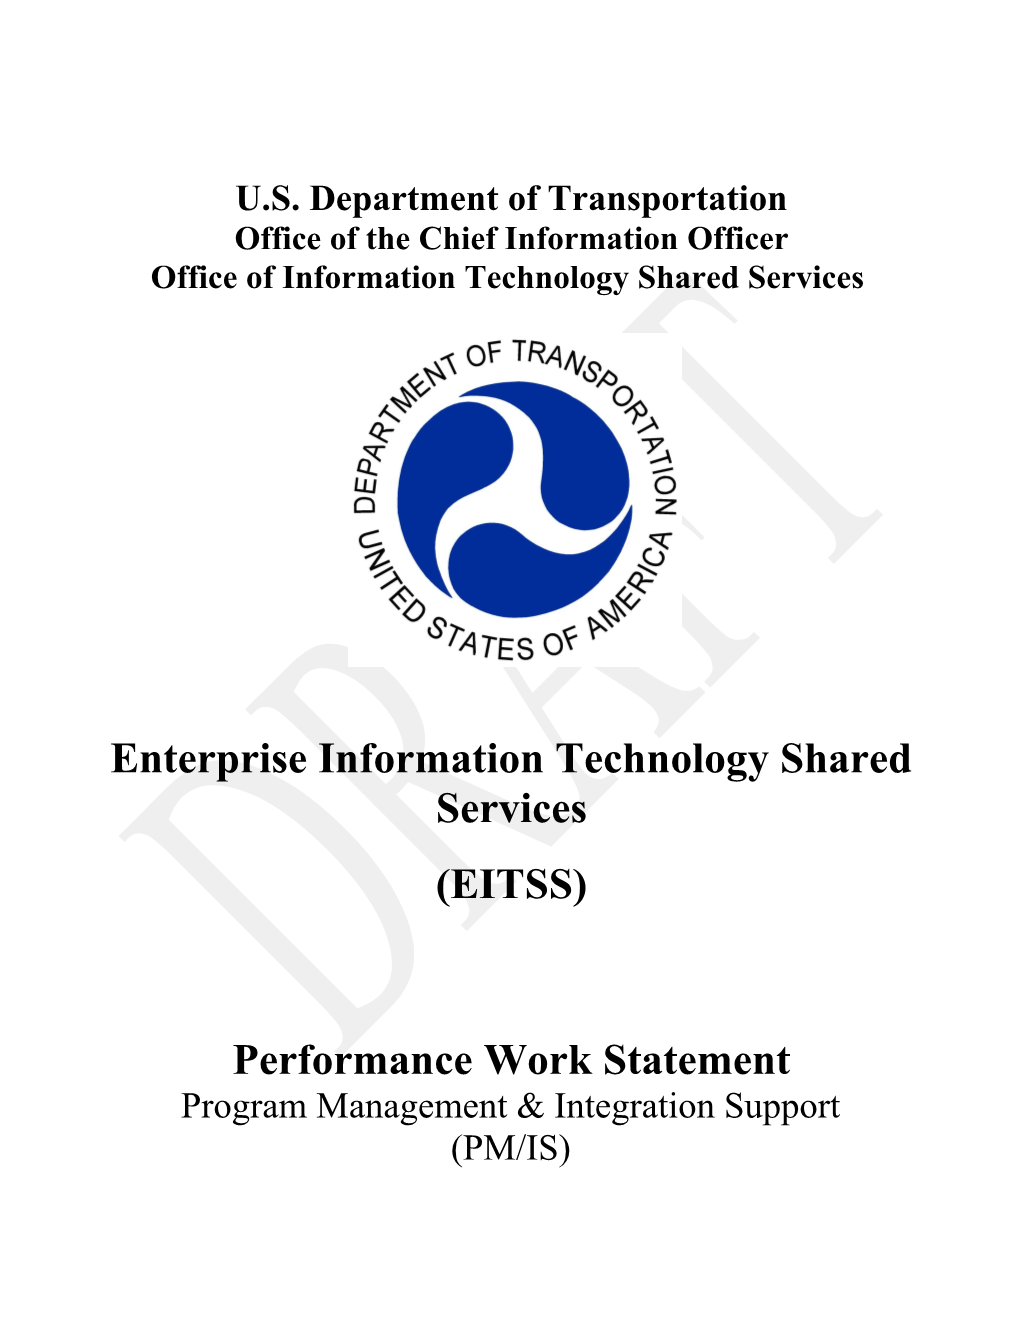 Enterprise Information Technology Shared Services